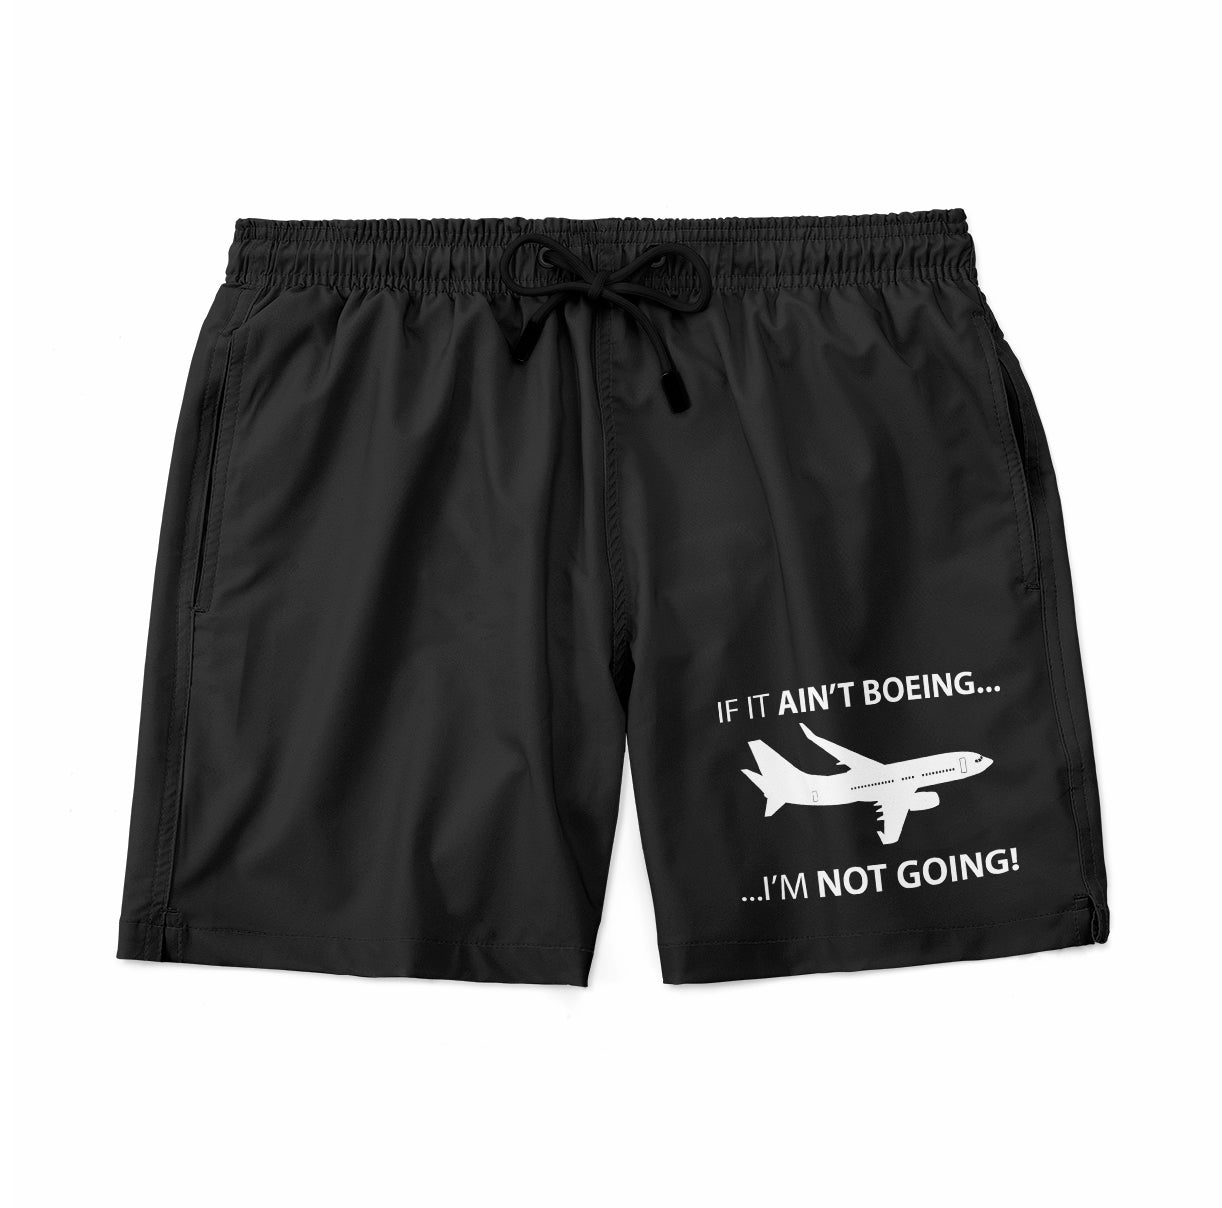 If It Ain't Boeing I'm Not Going! Designed Swim Trunks & Shorts